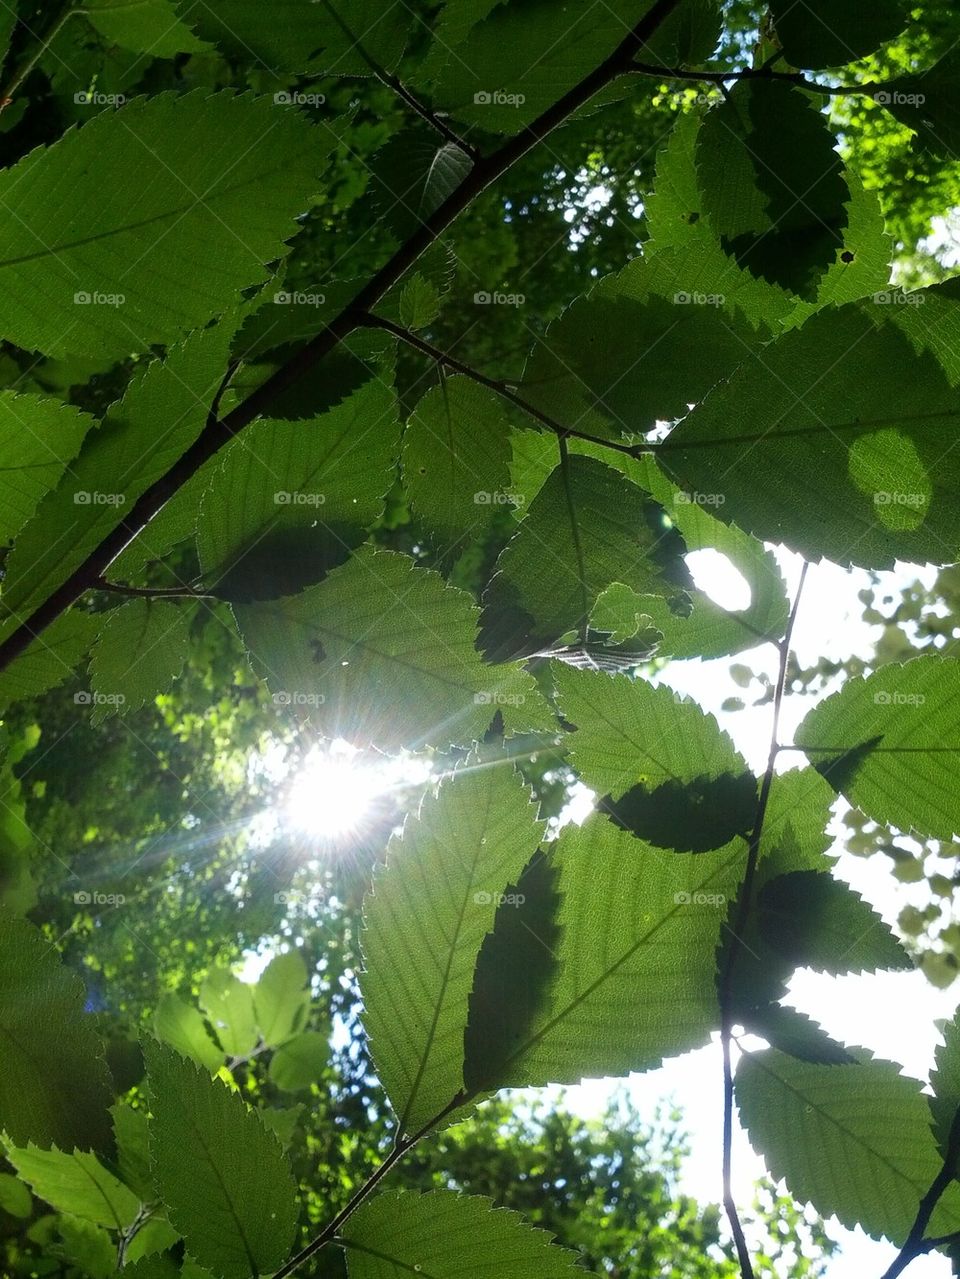 sunlight through the trees